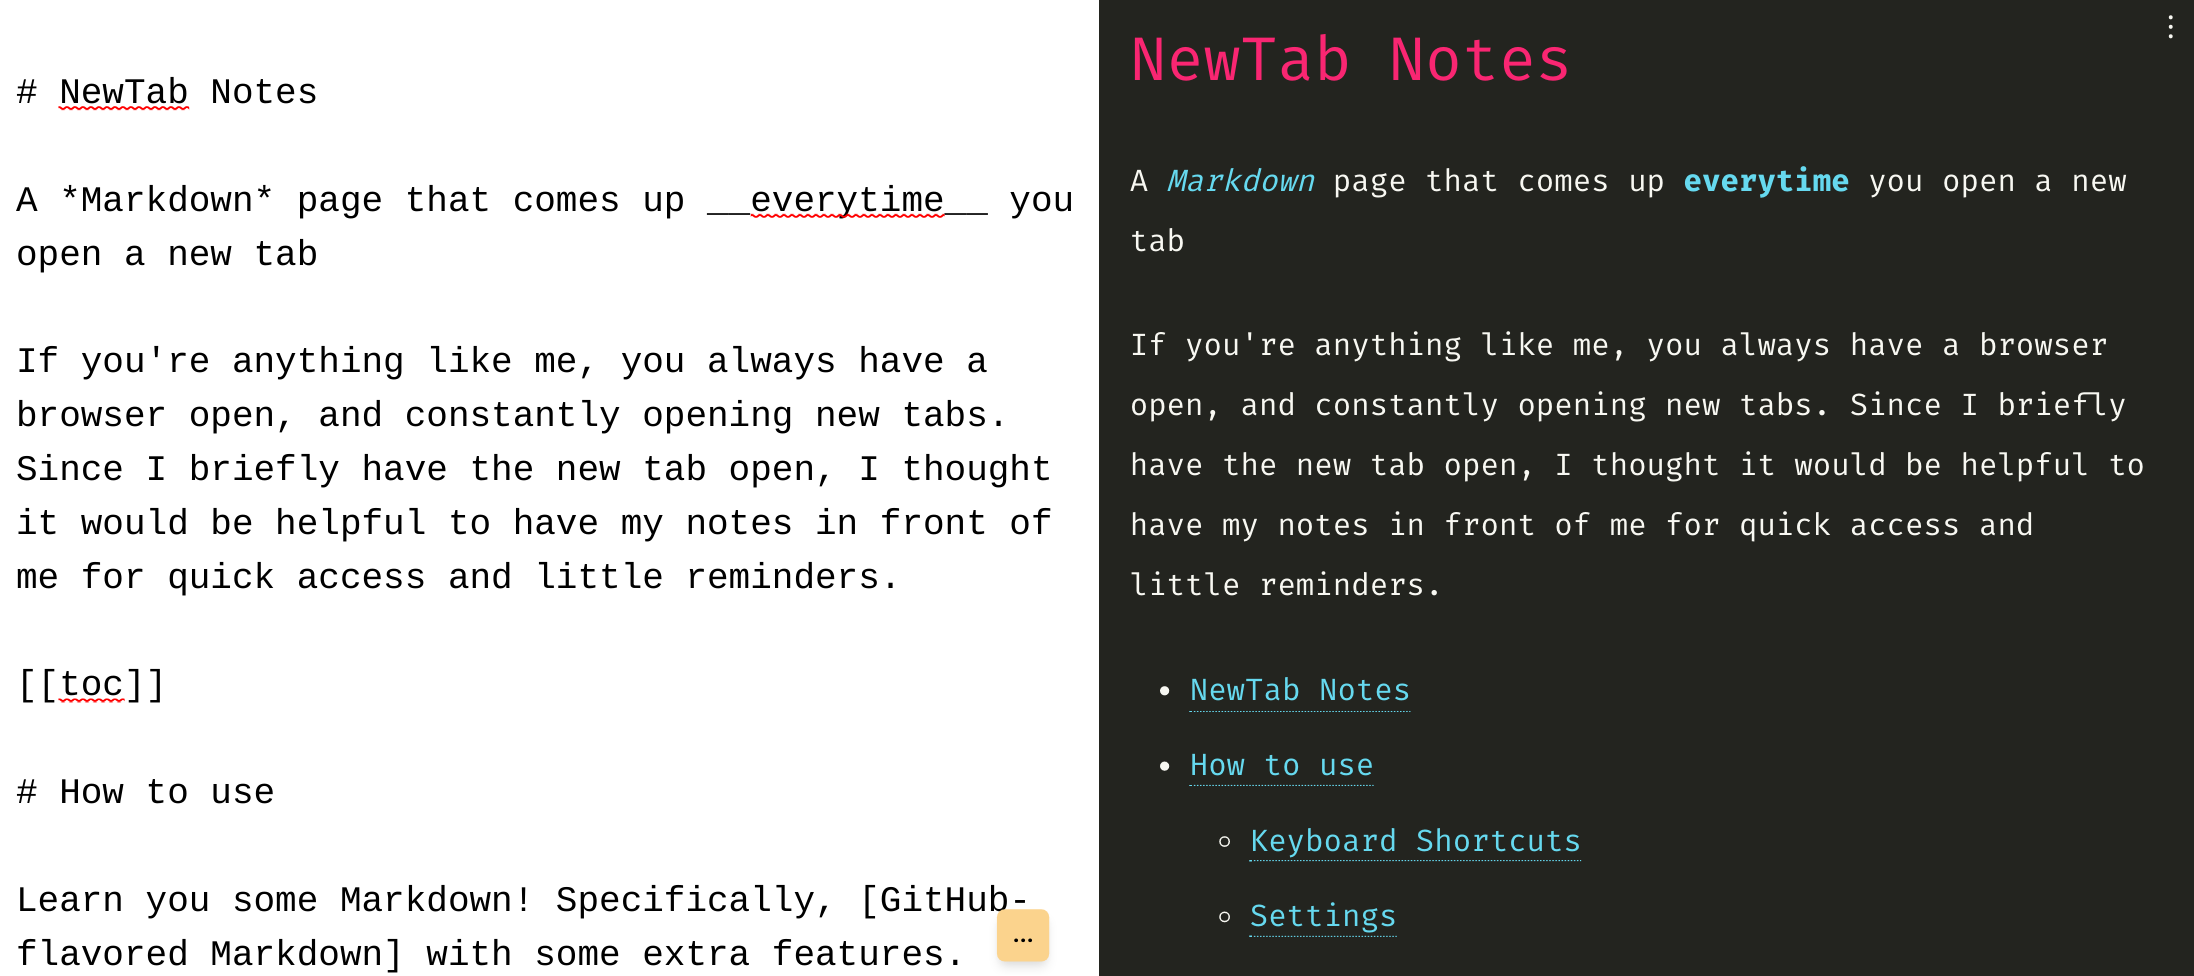 NewTab Notes sample screenshot